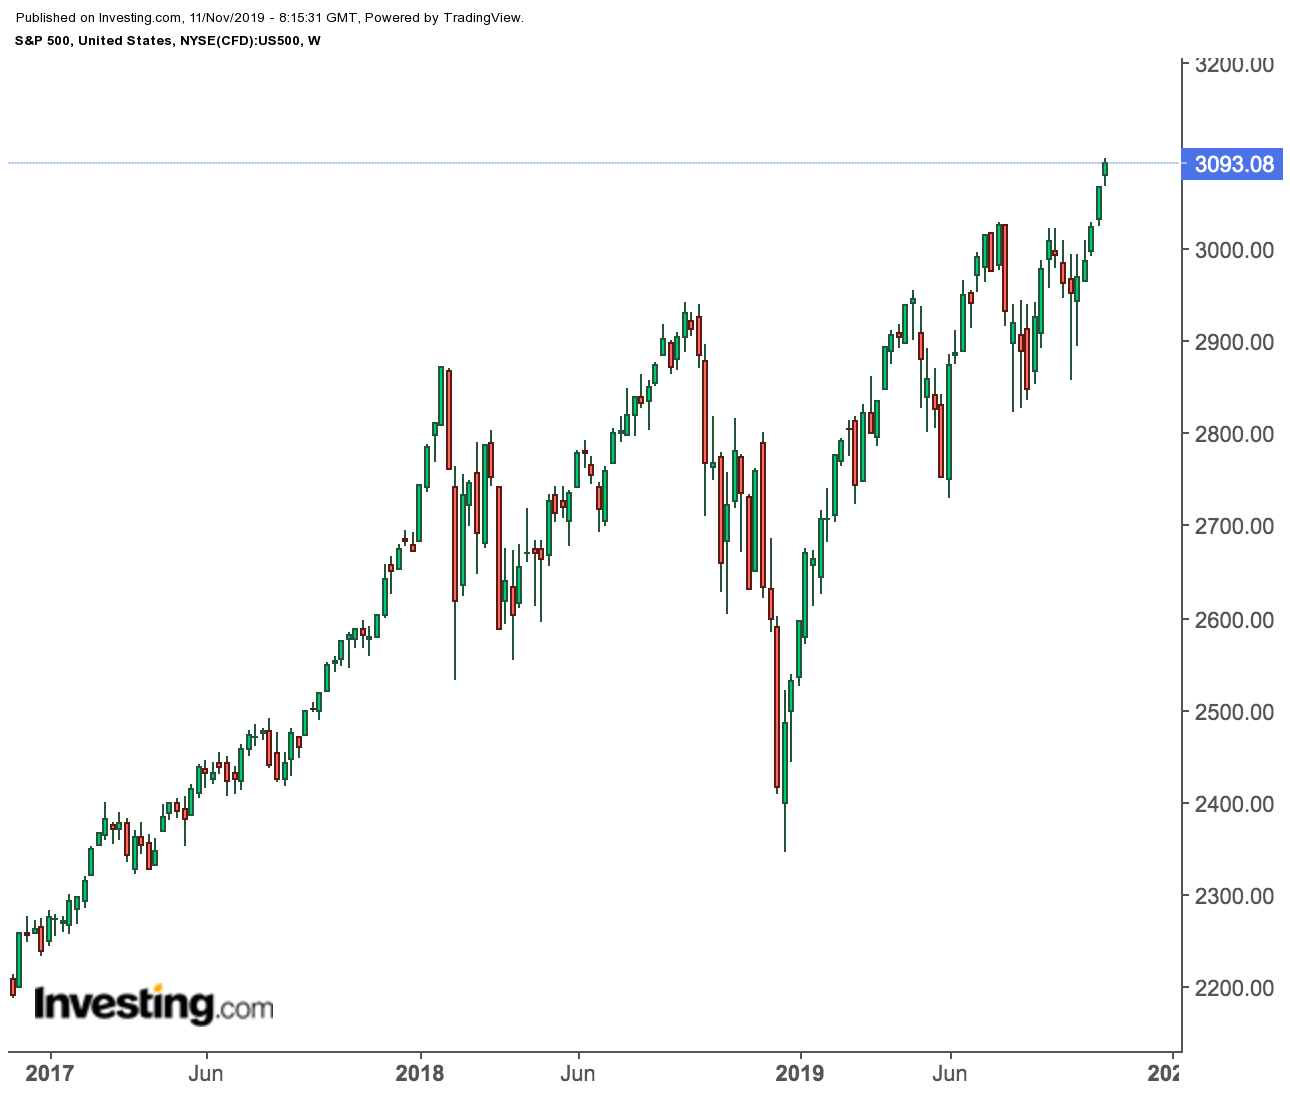 S&P 500 Weekly Price Chart